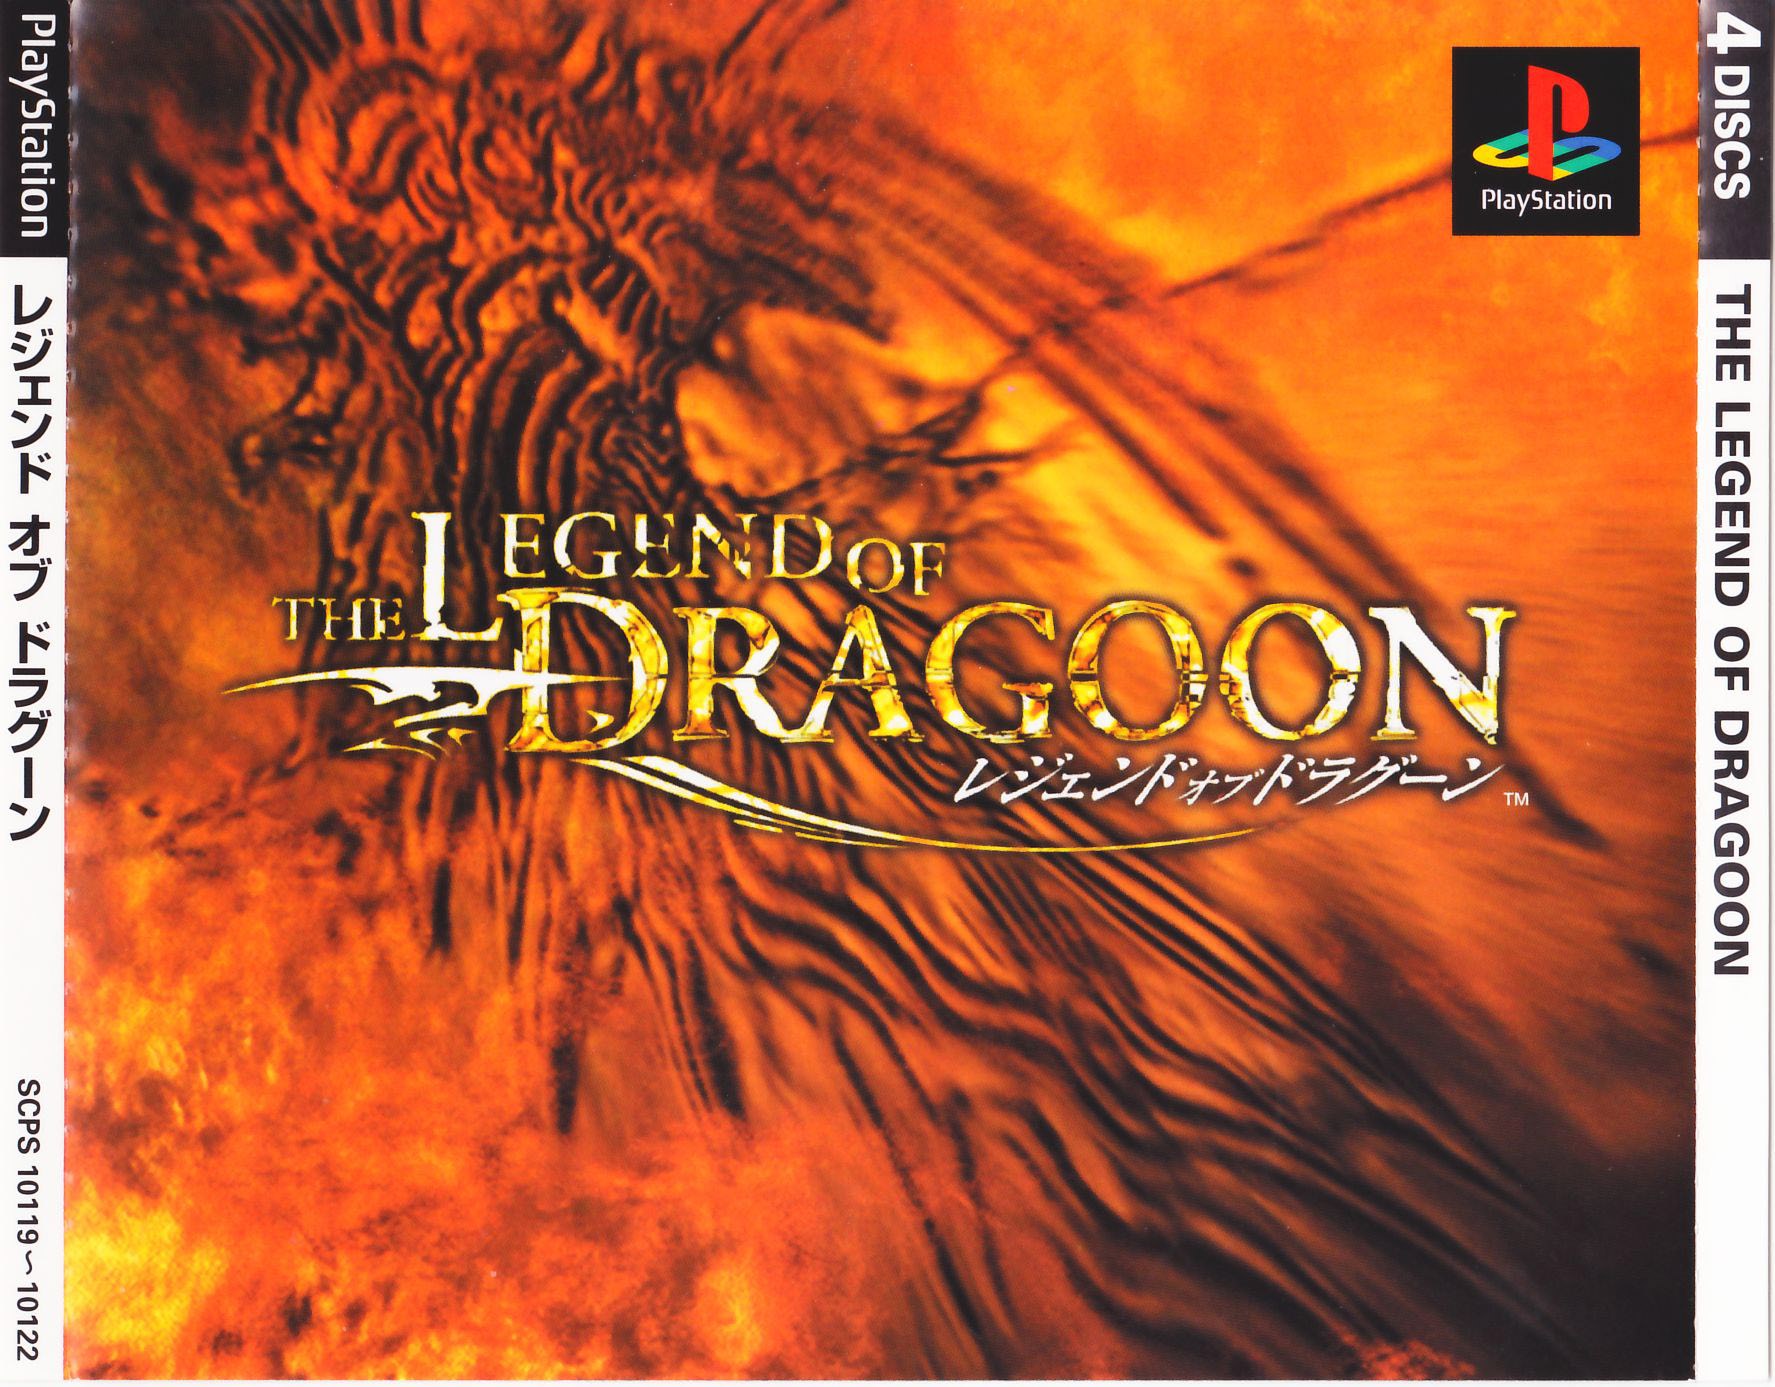 Legend of dragoon forbidden land